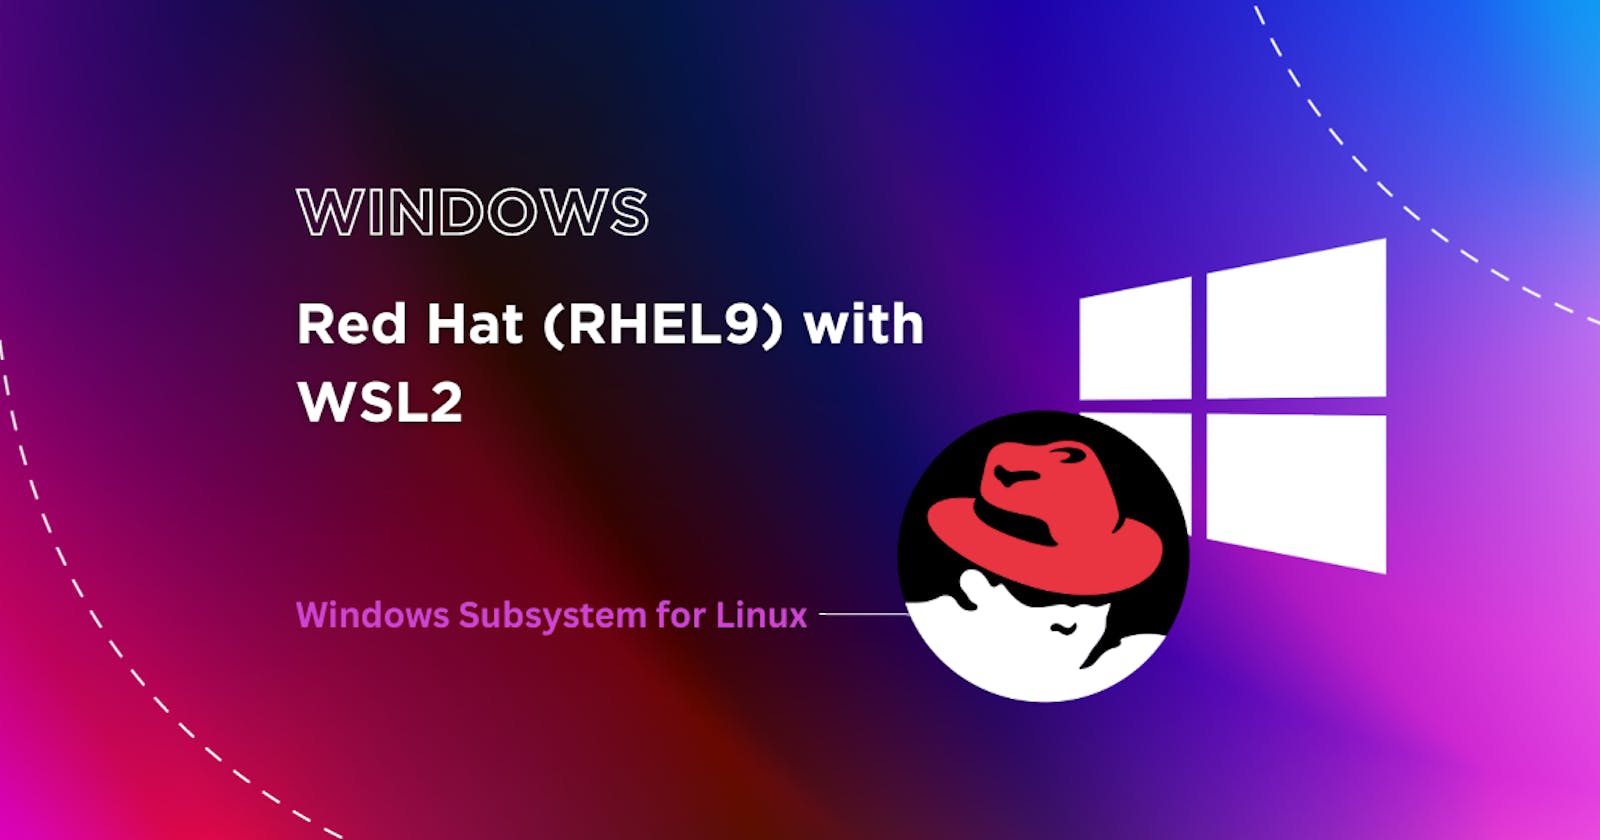 WINDOWS: Red Hat (RHEL9) with WSL2